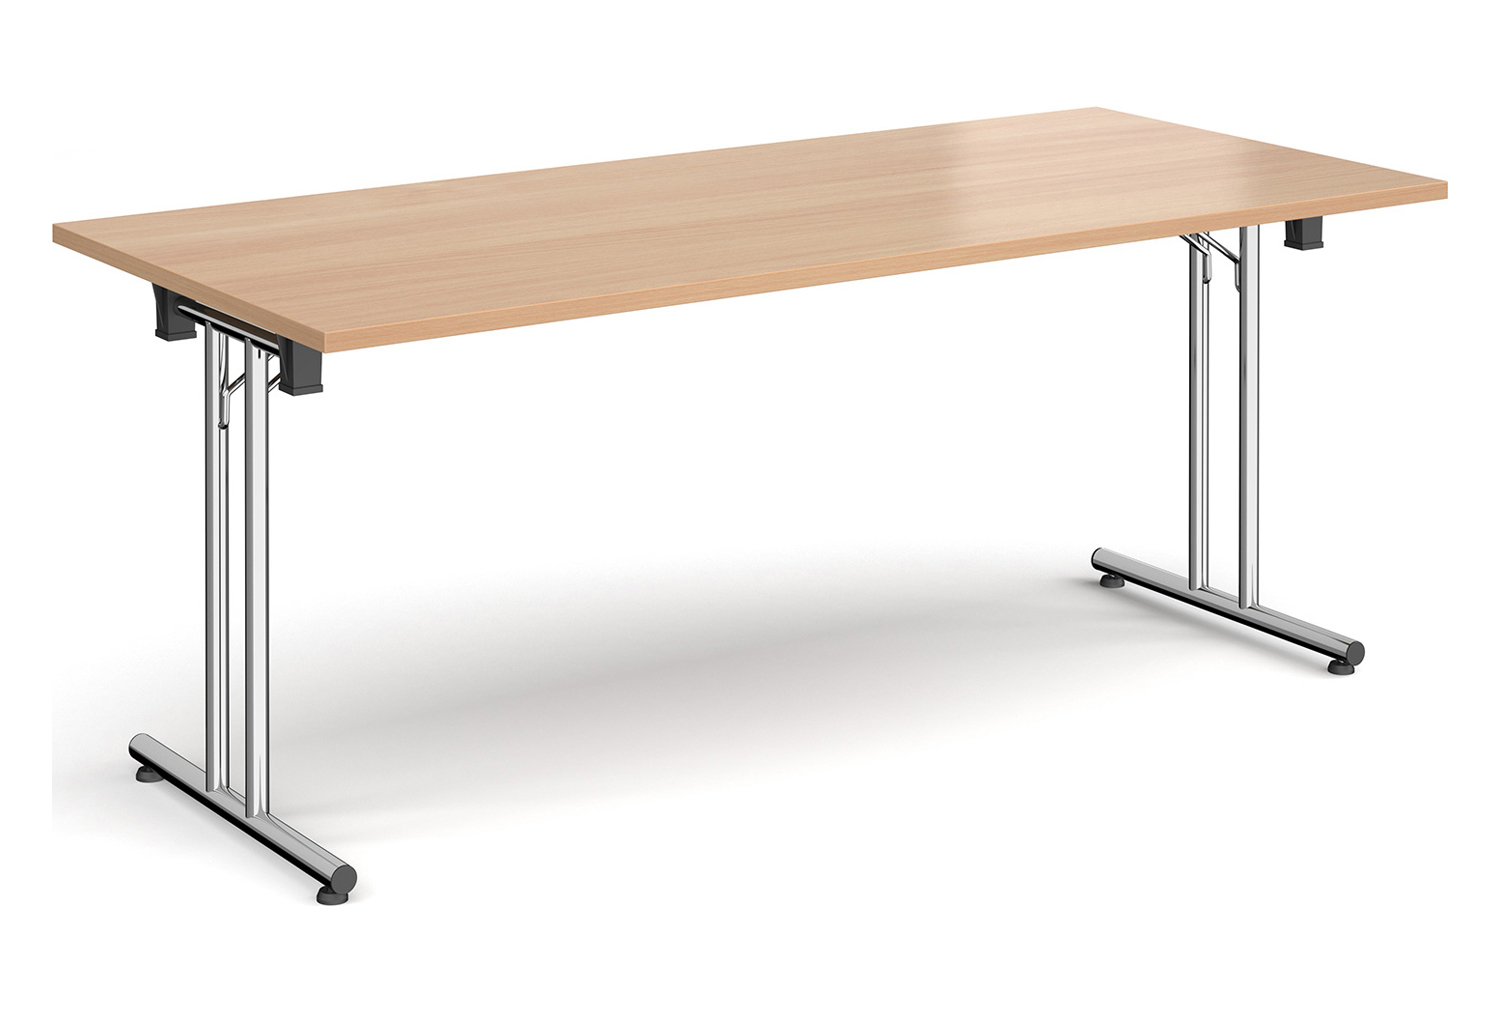 Durand Rectangular Folding Table, 180wx80dx73h (cm), Chrome Frame, Beech, Fully Installed